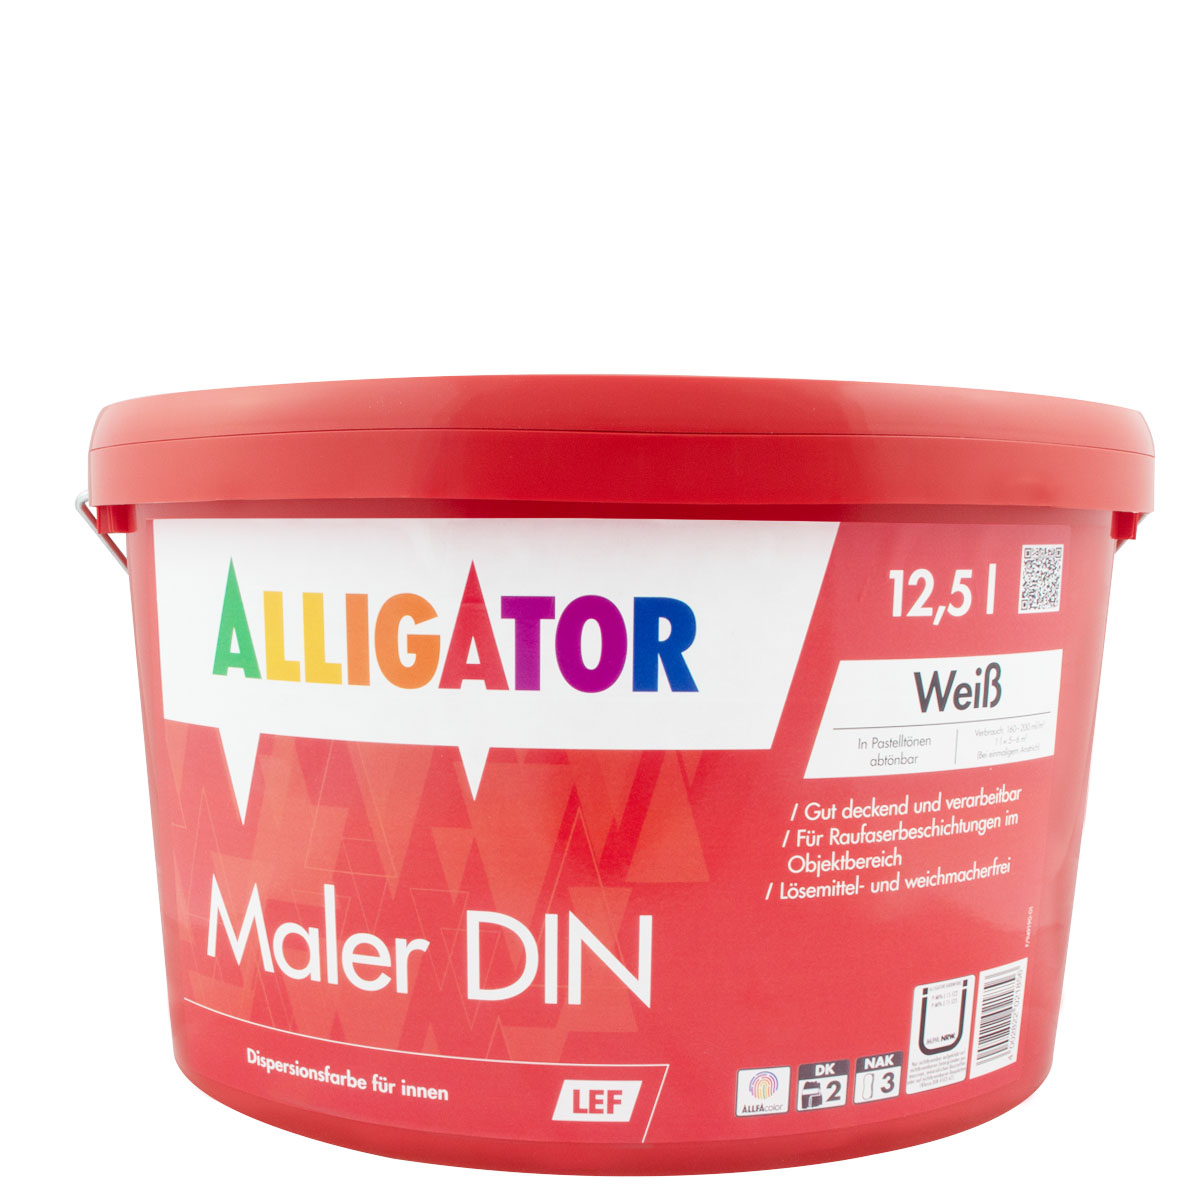 Alligator Maler DIN LEF 12,5L reinweiss RAL9010, Dispersions-Innenfarbe